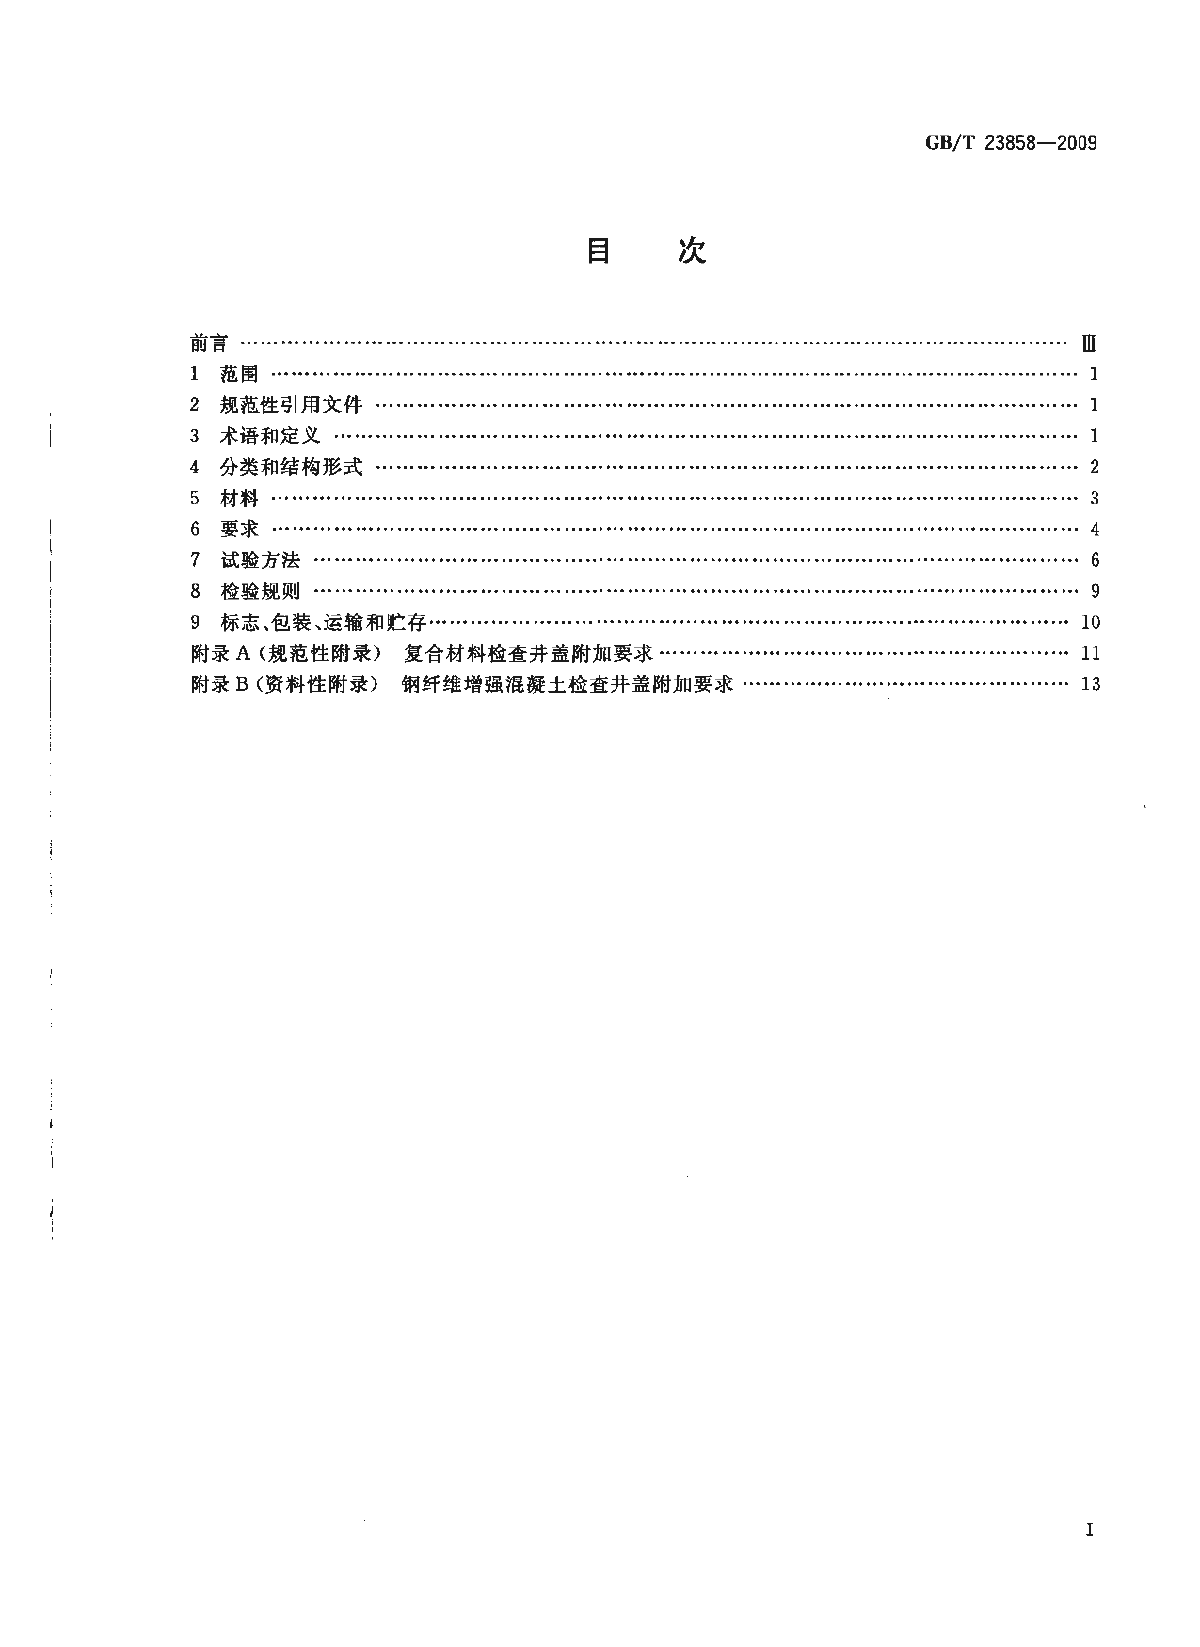 GBT 23858-2009 检查井盖.pdf-图二